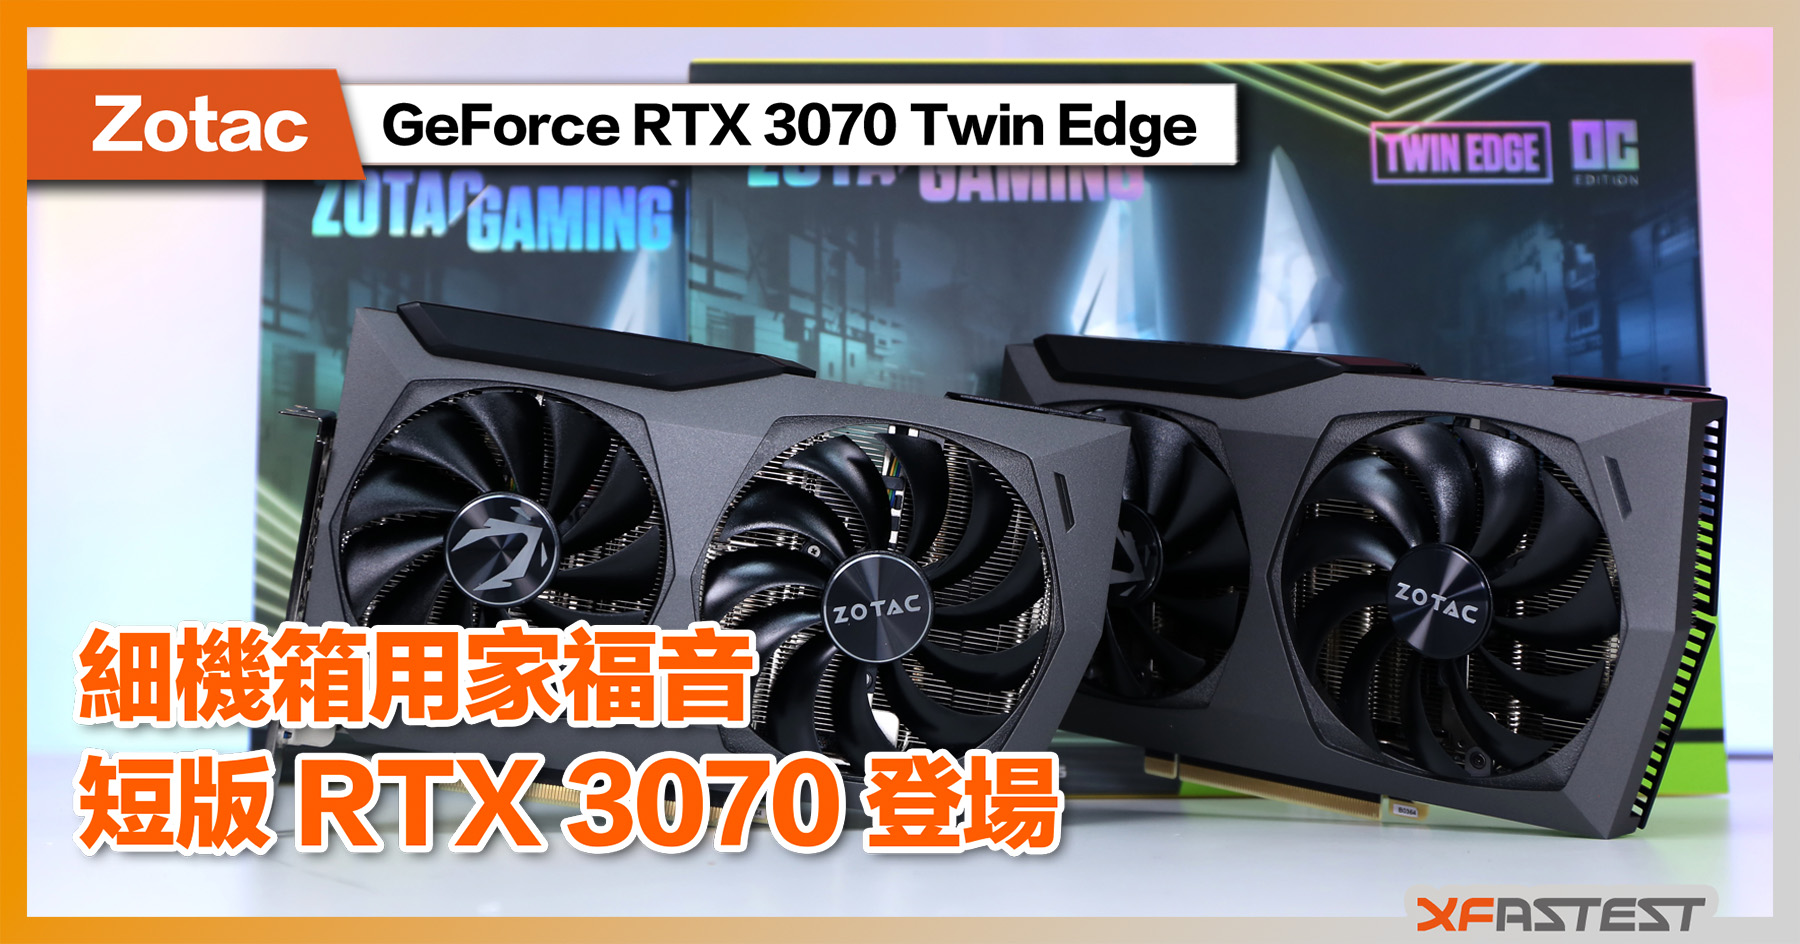 XF 開箱] 細機箱用家福音短版GeForce RTX 3070 登場Zotac GeForce RTX